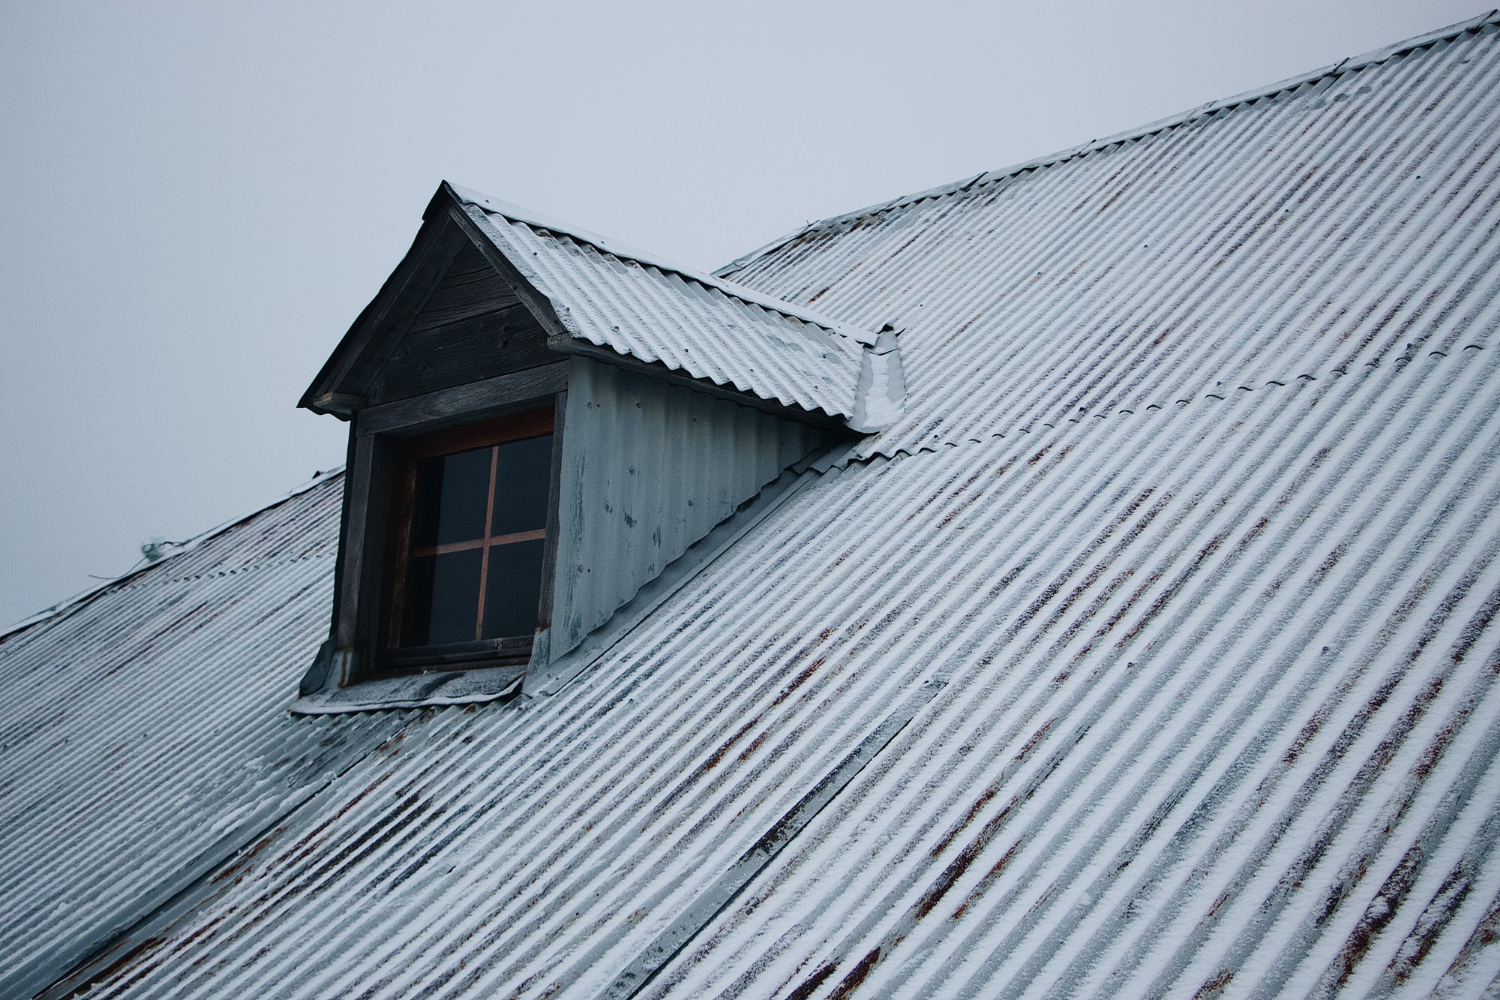 worn roof